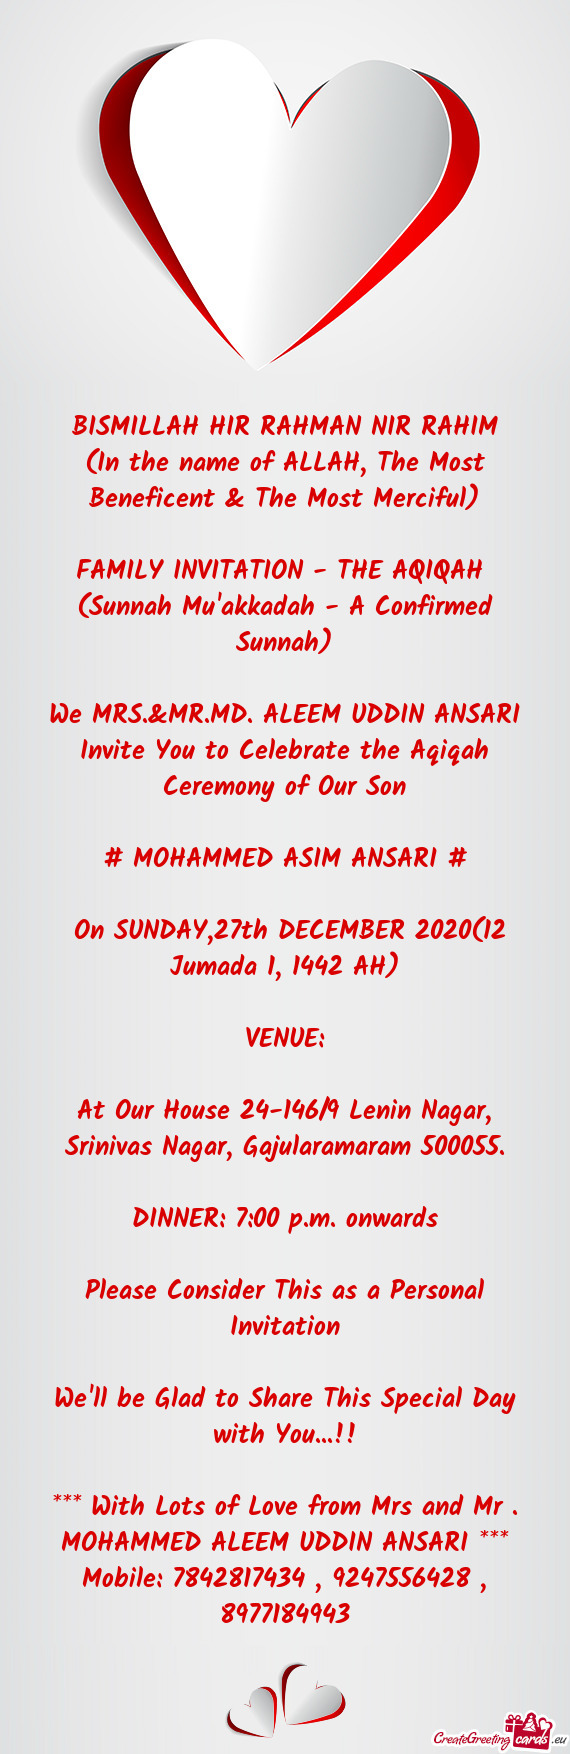 We MRS.&MR.MD. ALEEM UDDIN ANSARI Invite You to Celebrate the Aqiqah Ceremony of Our Son